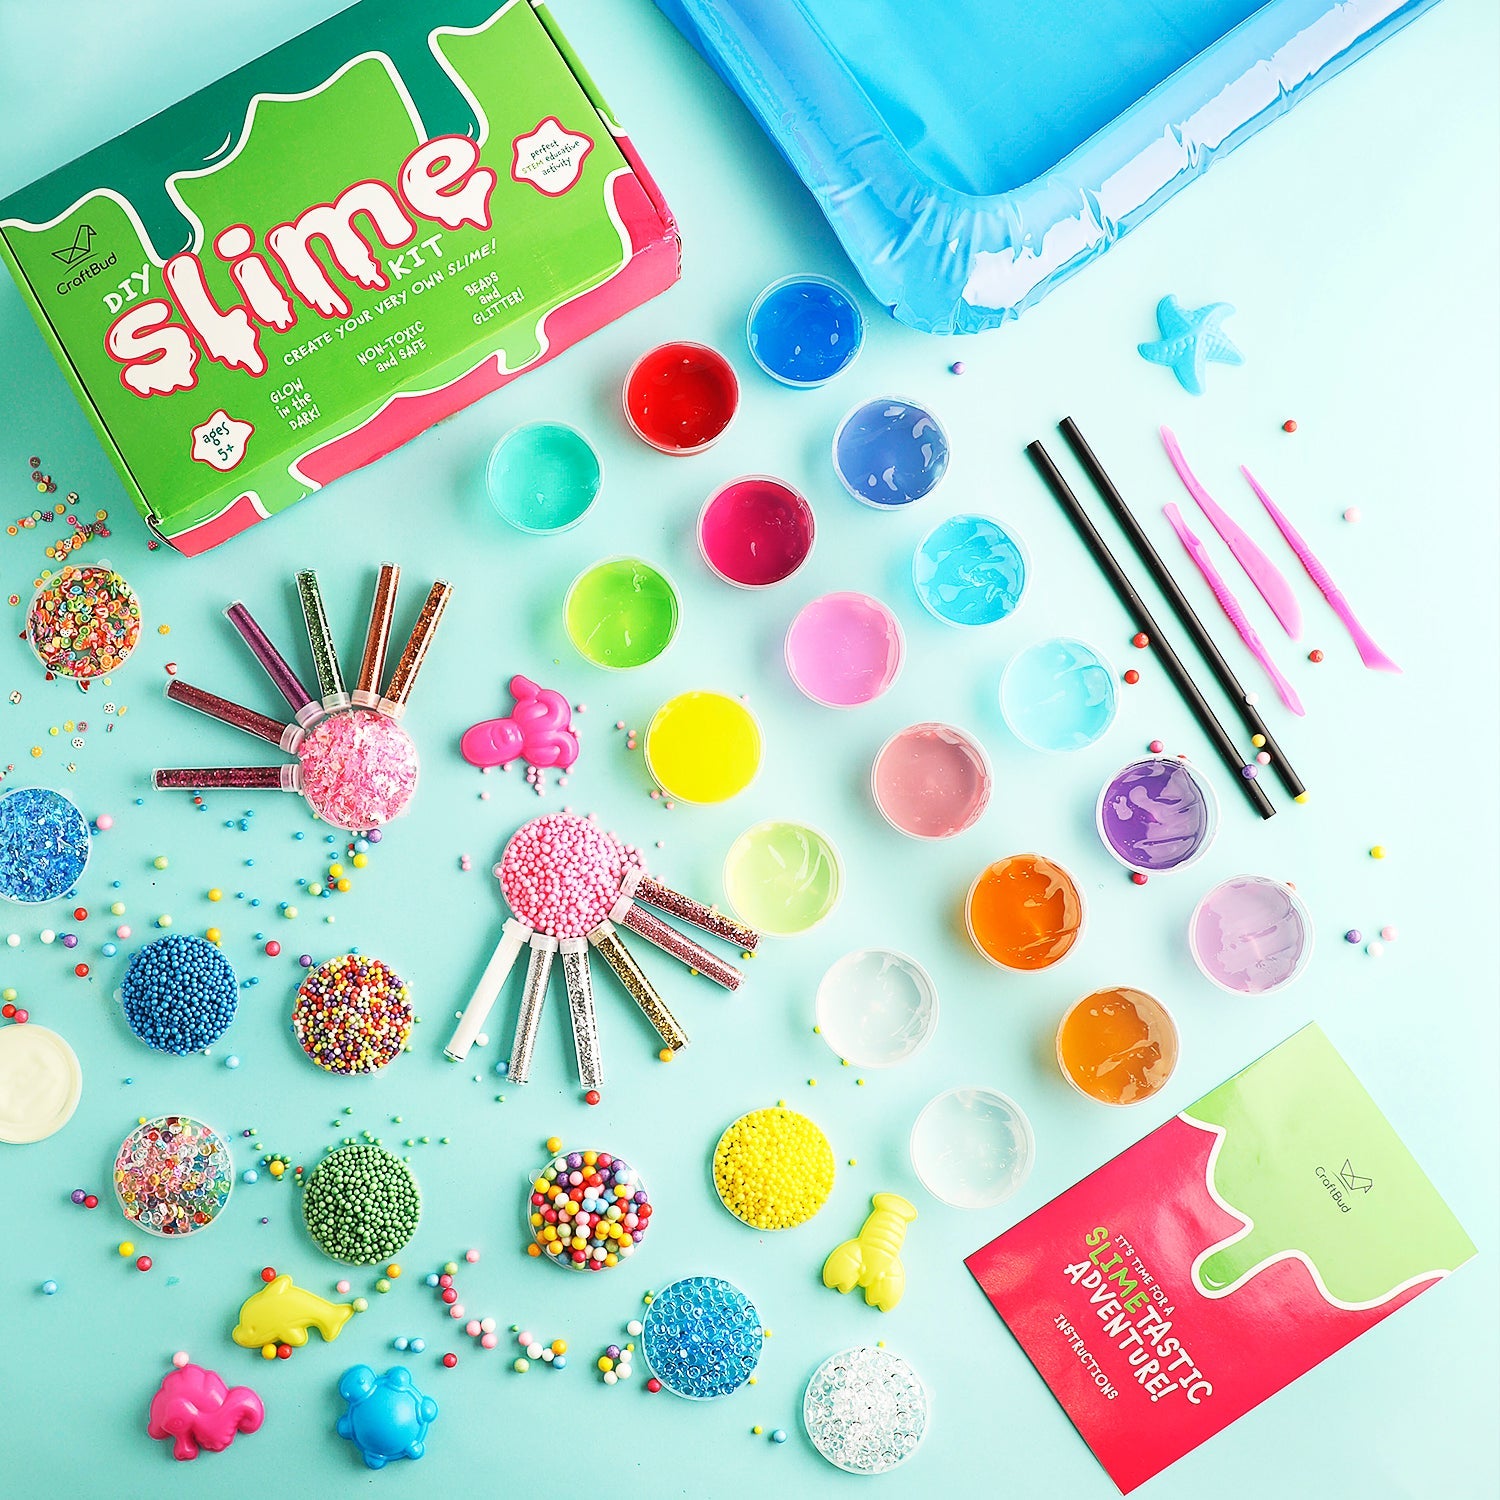 DIY Slime Kit for kids – Cozy Array